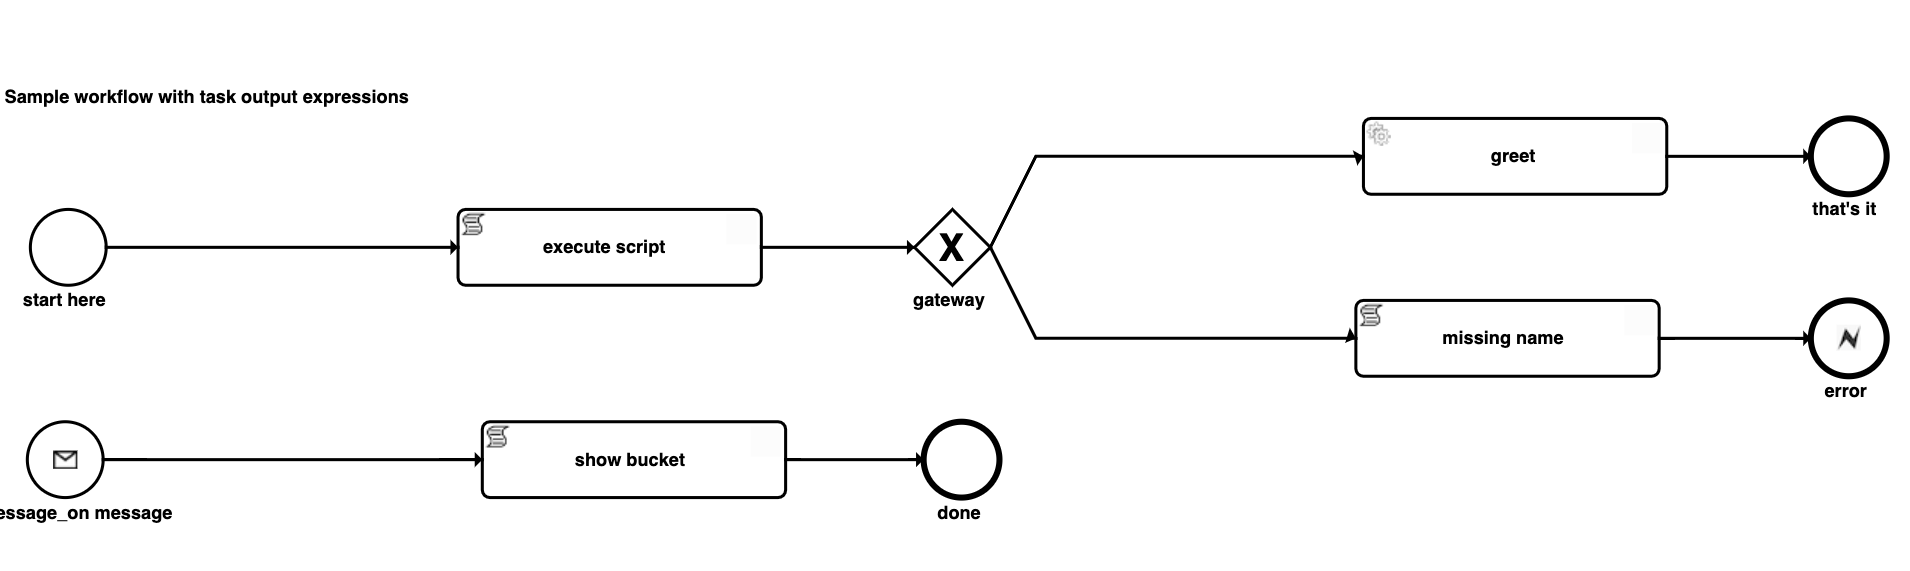 Workflow definition image for Java DSL